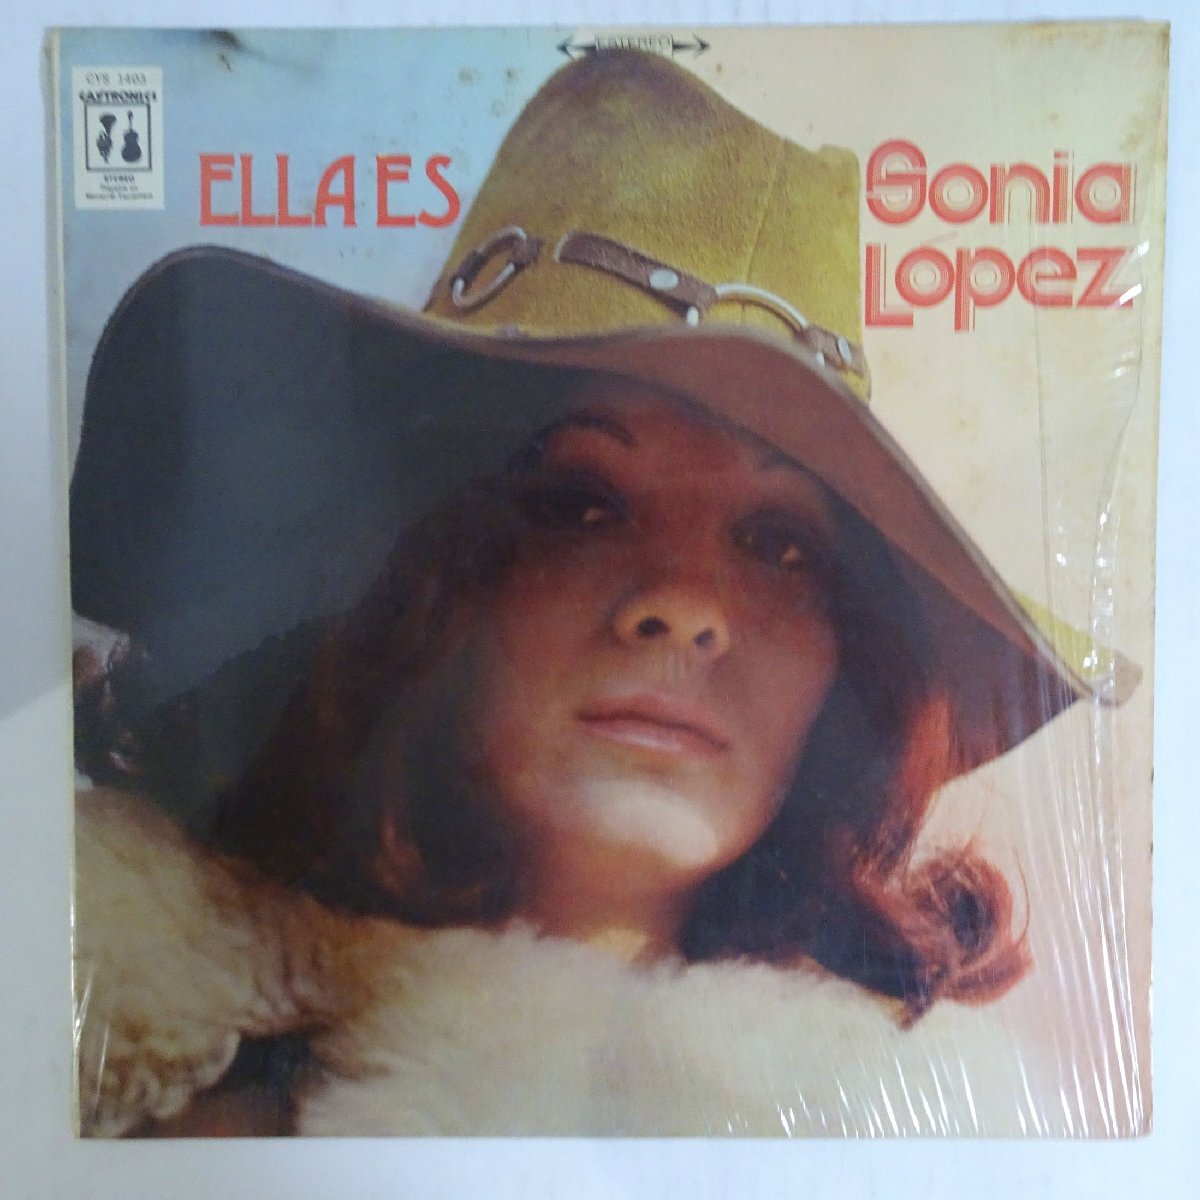 11186349;【US盤/Latin/シュリンク】Sonia Lopez / Ella Esの画像1